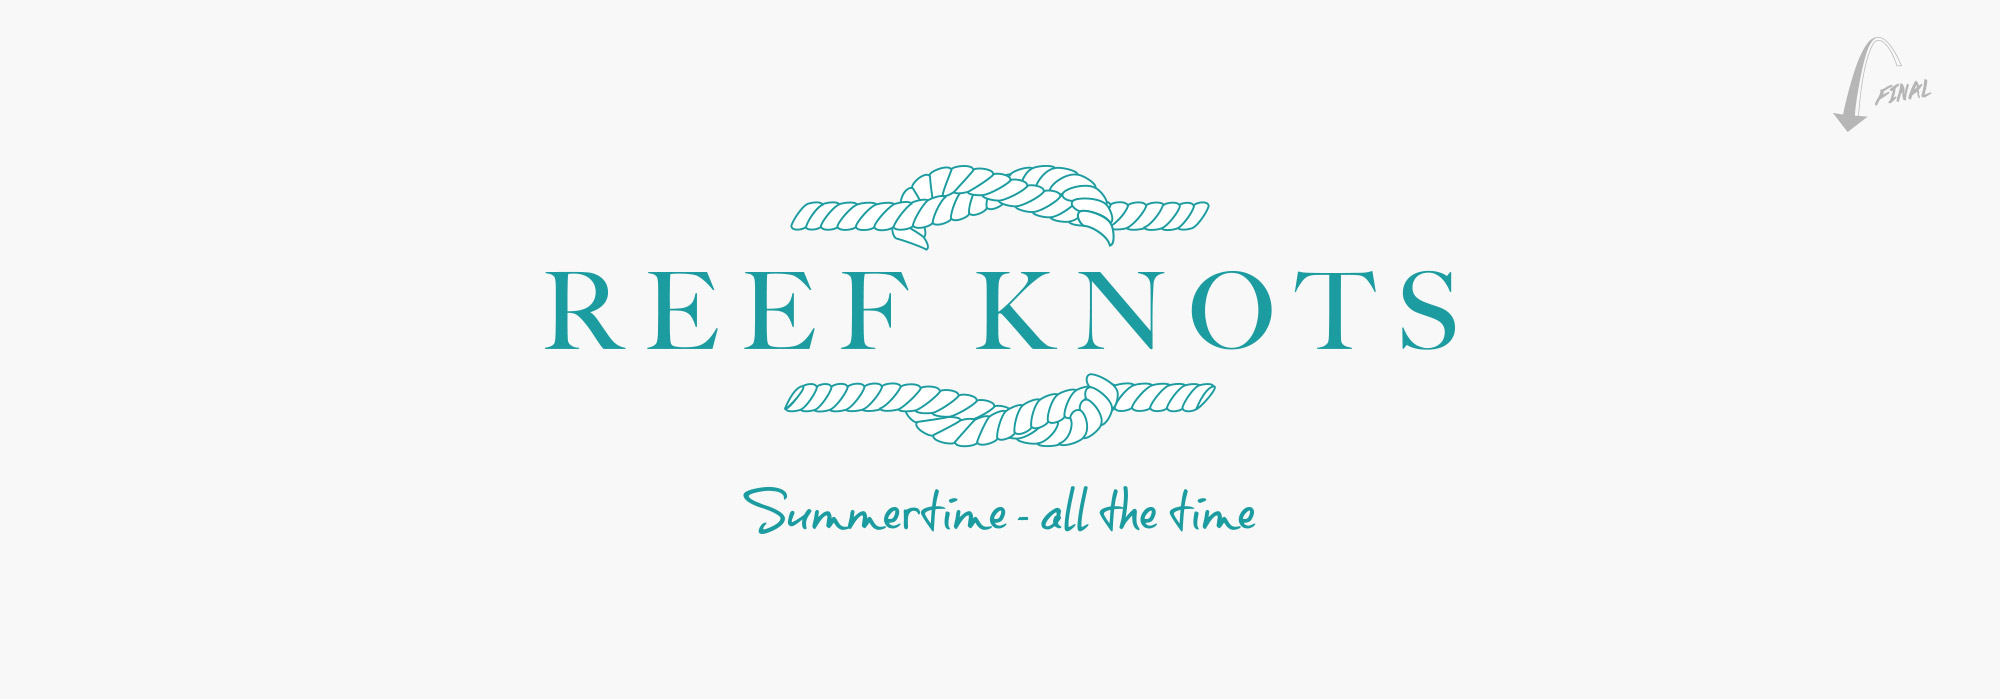 reef knots logo design